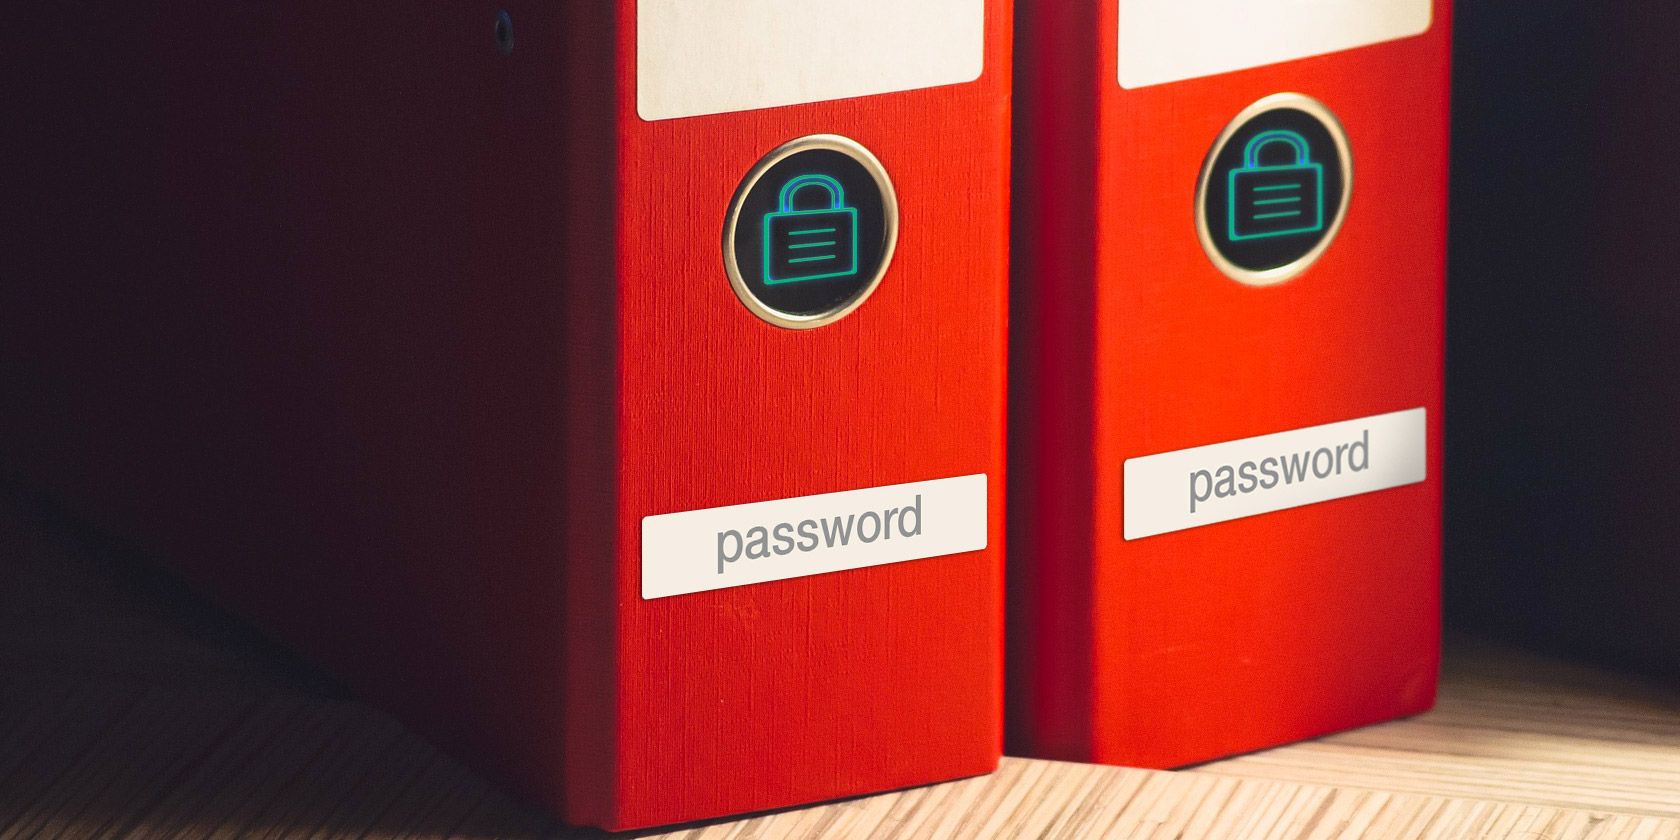 password protect folder on dropbox